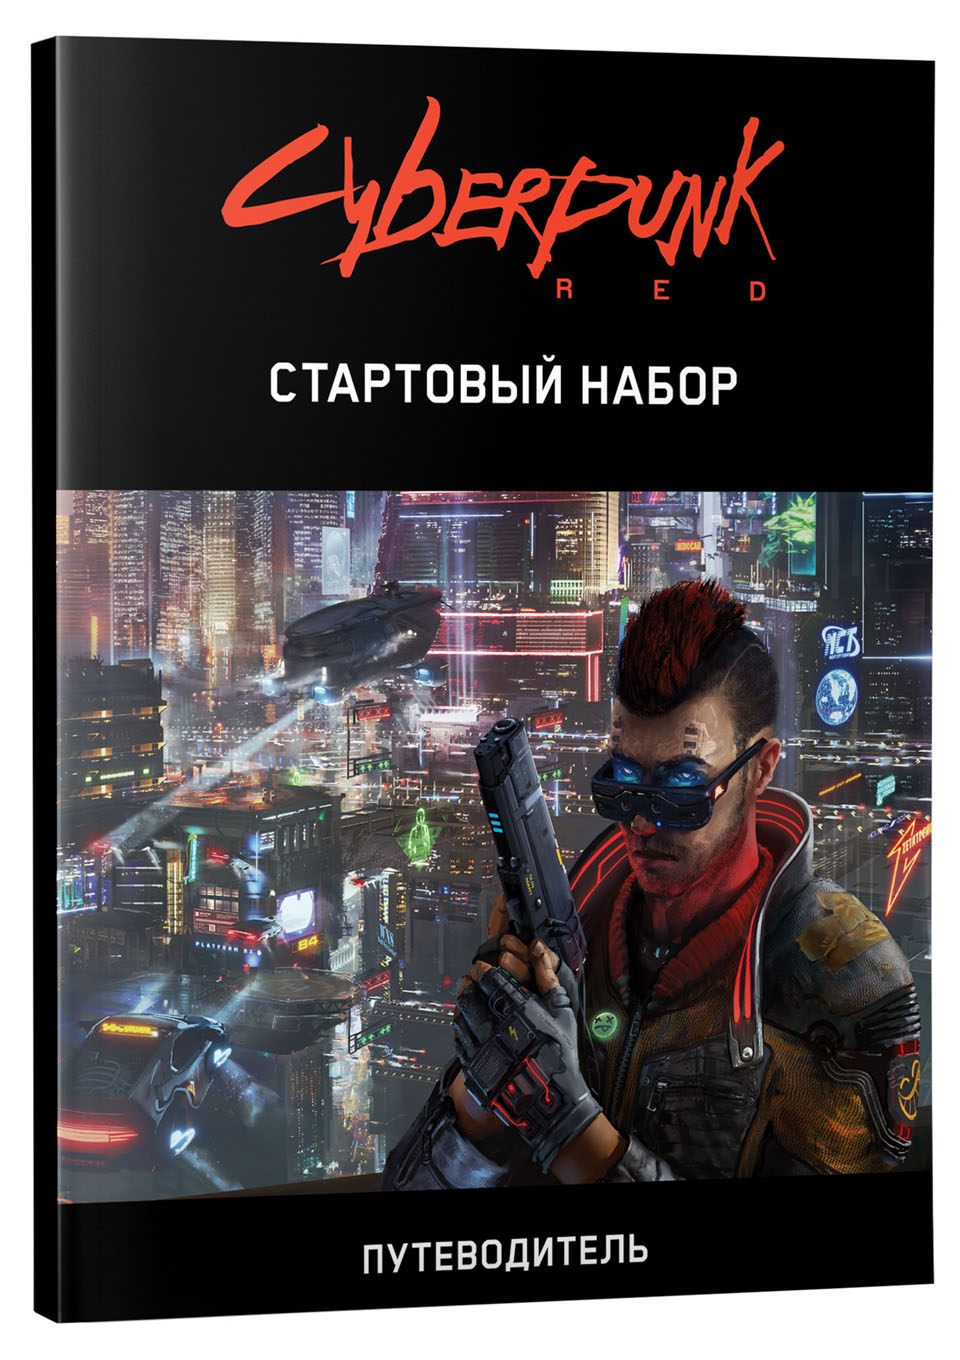 Cyberpunk red стартовый набор pdf фото 15